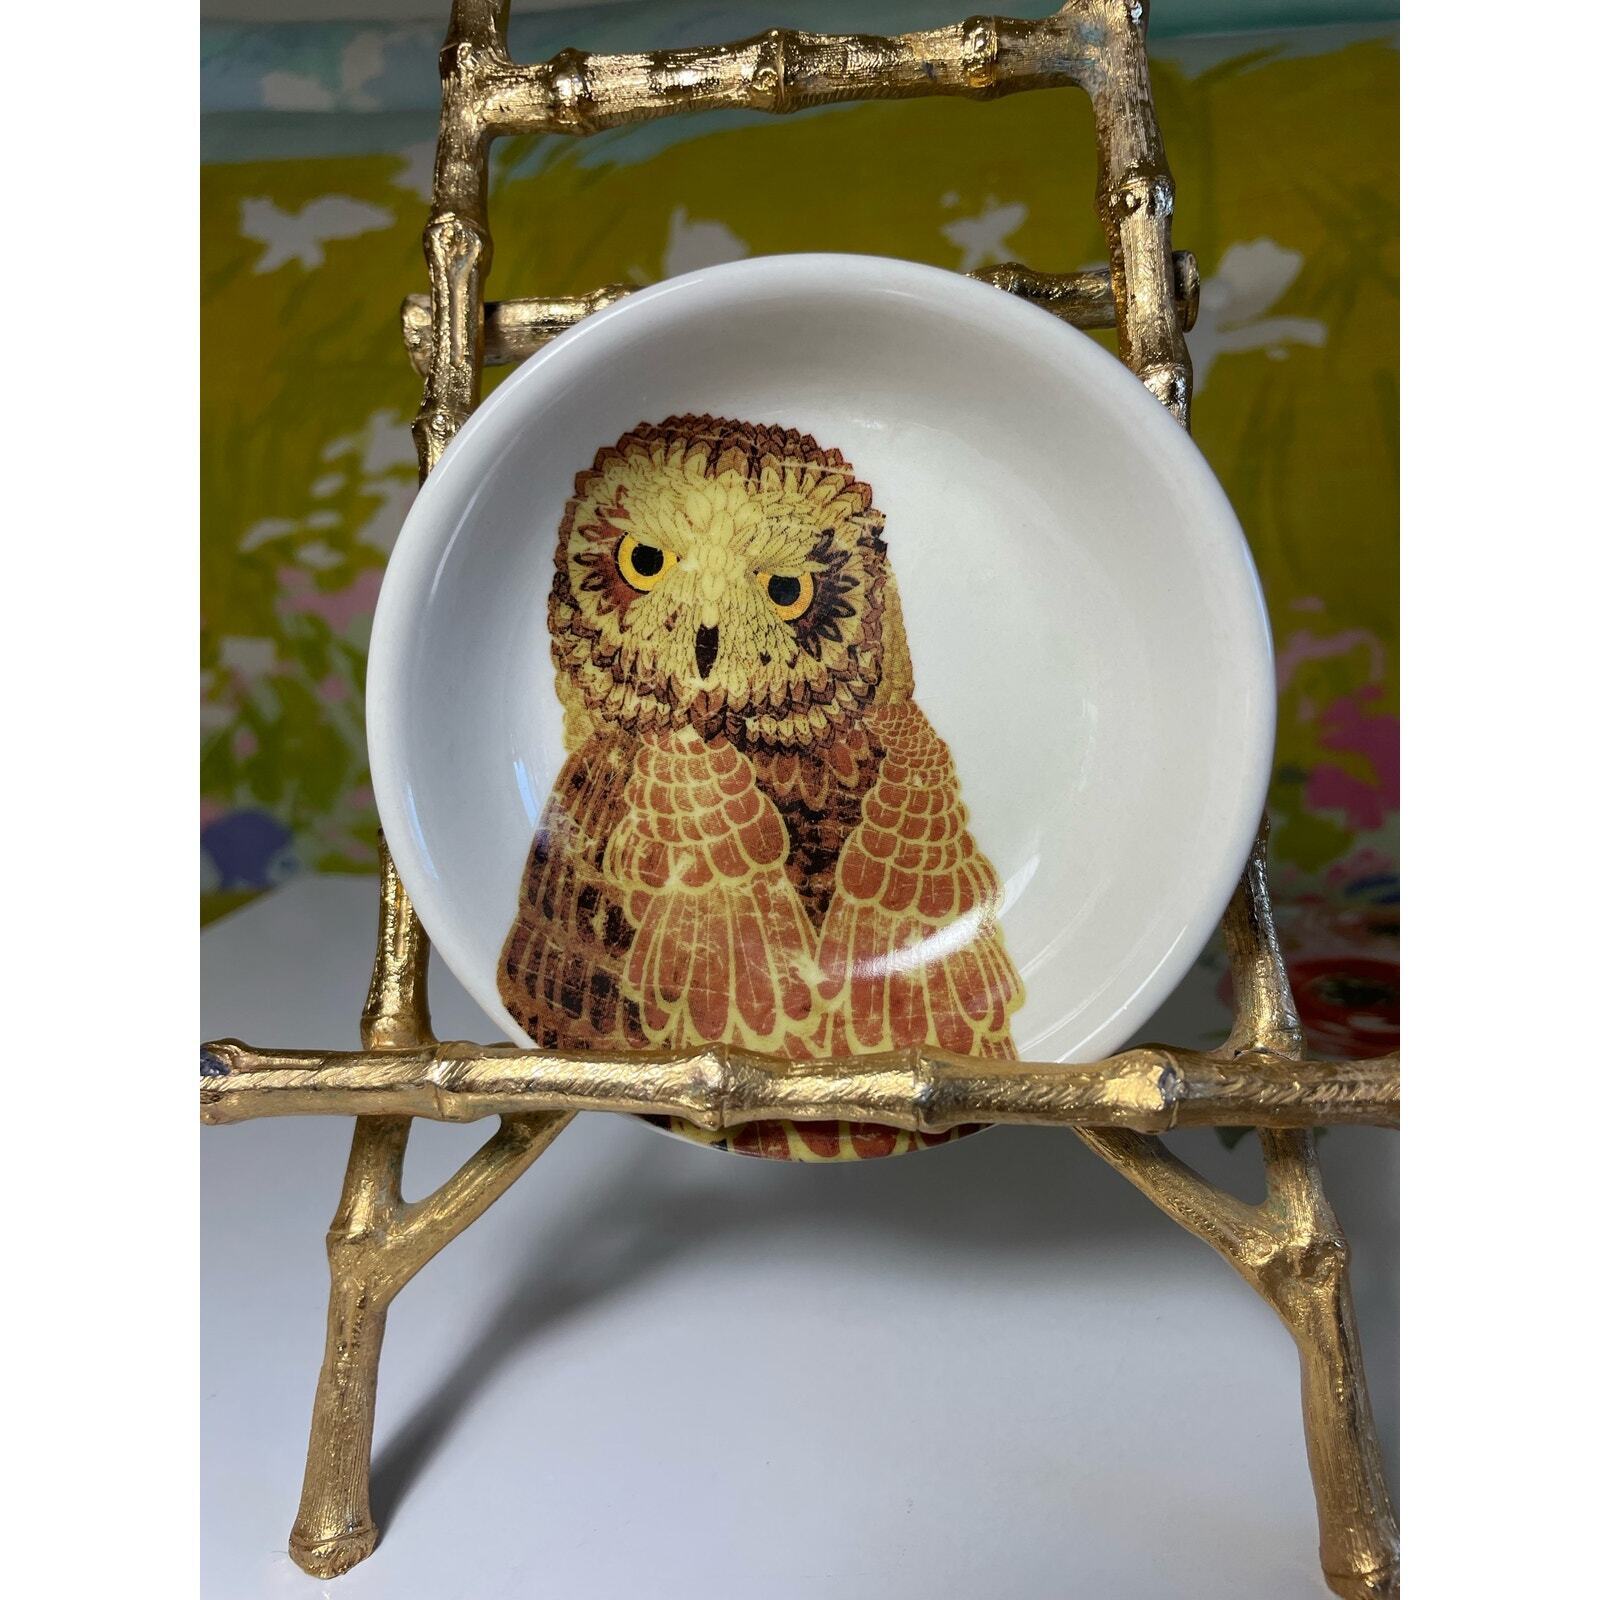 Creative CO-OP Owl Trinket Dish Basin